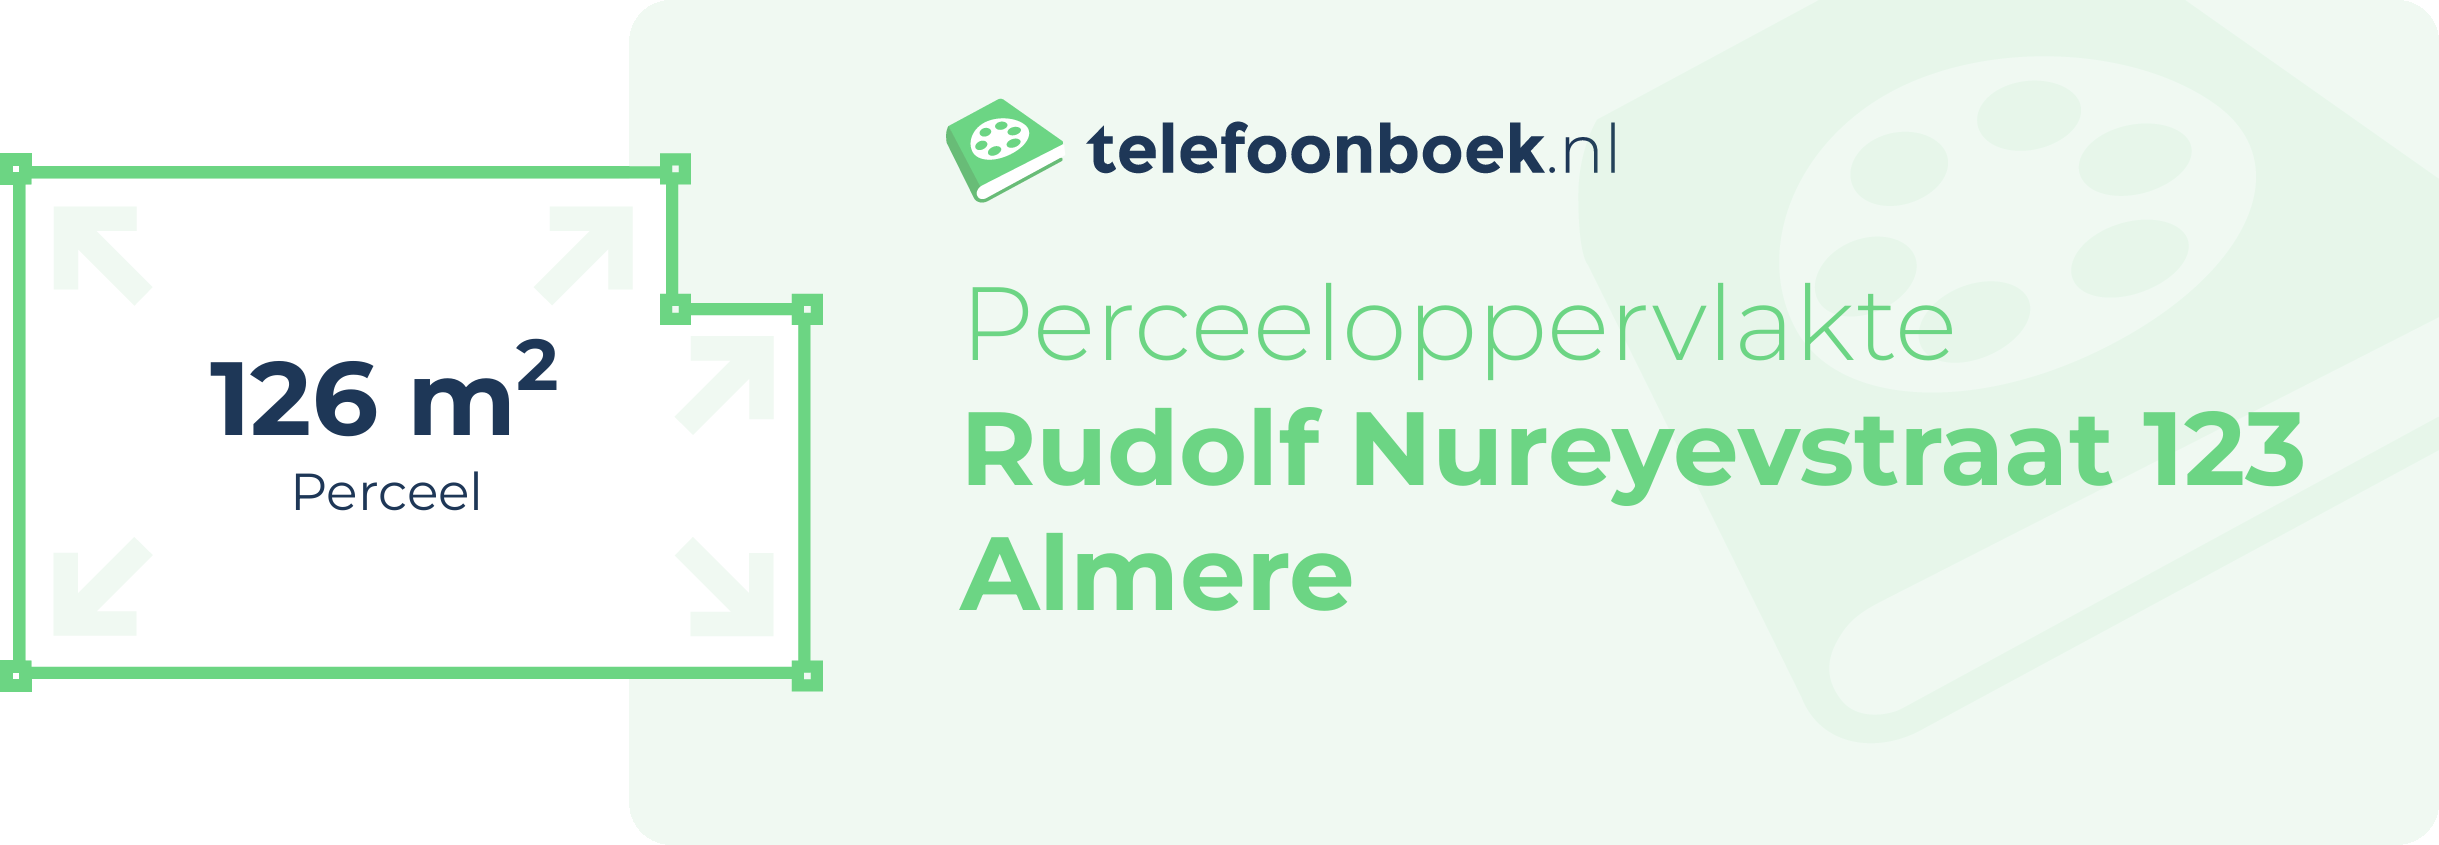 Perceeloppervlakte Rudolf Nureyevstraat 123 Almere